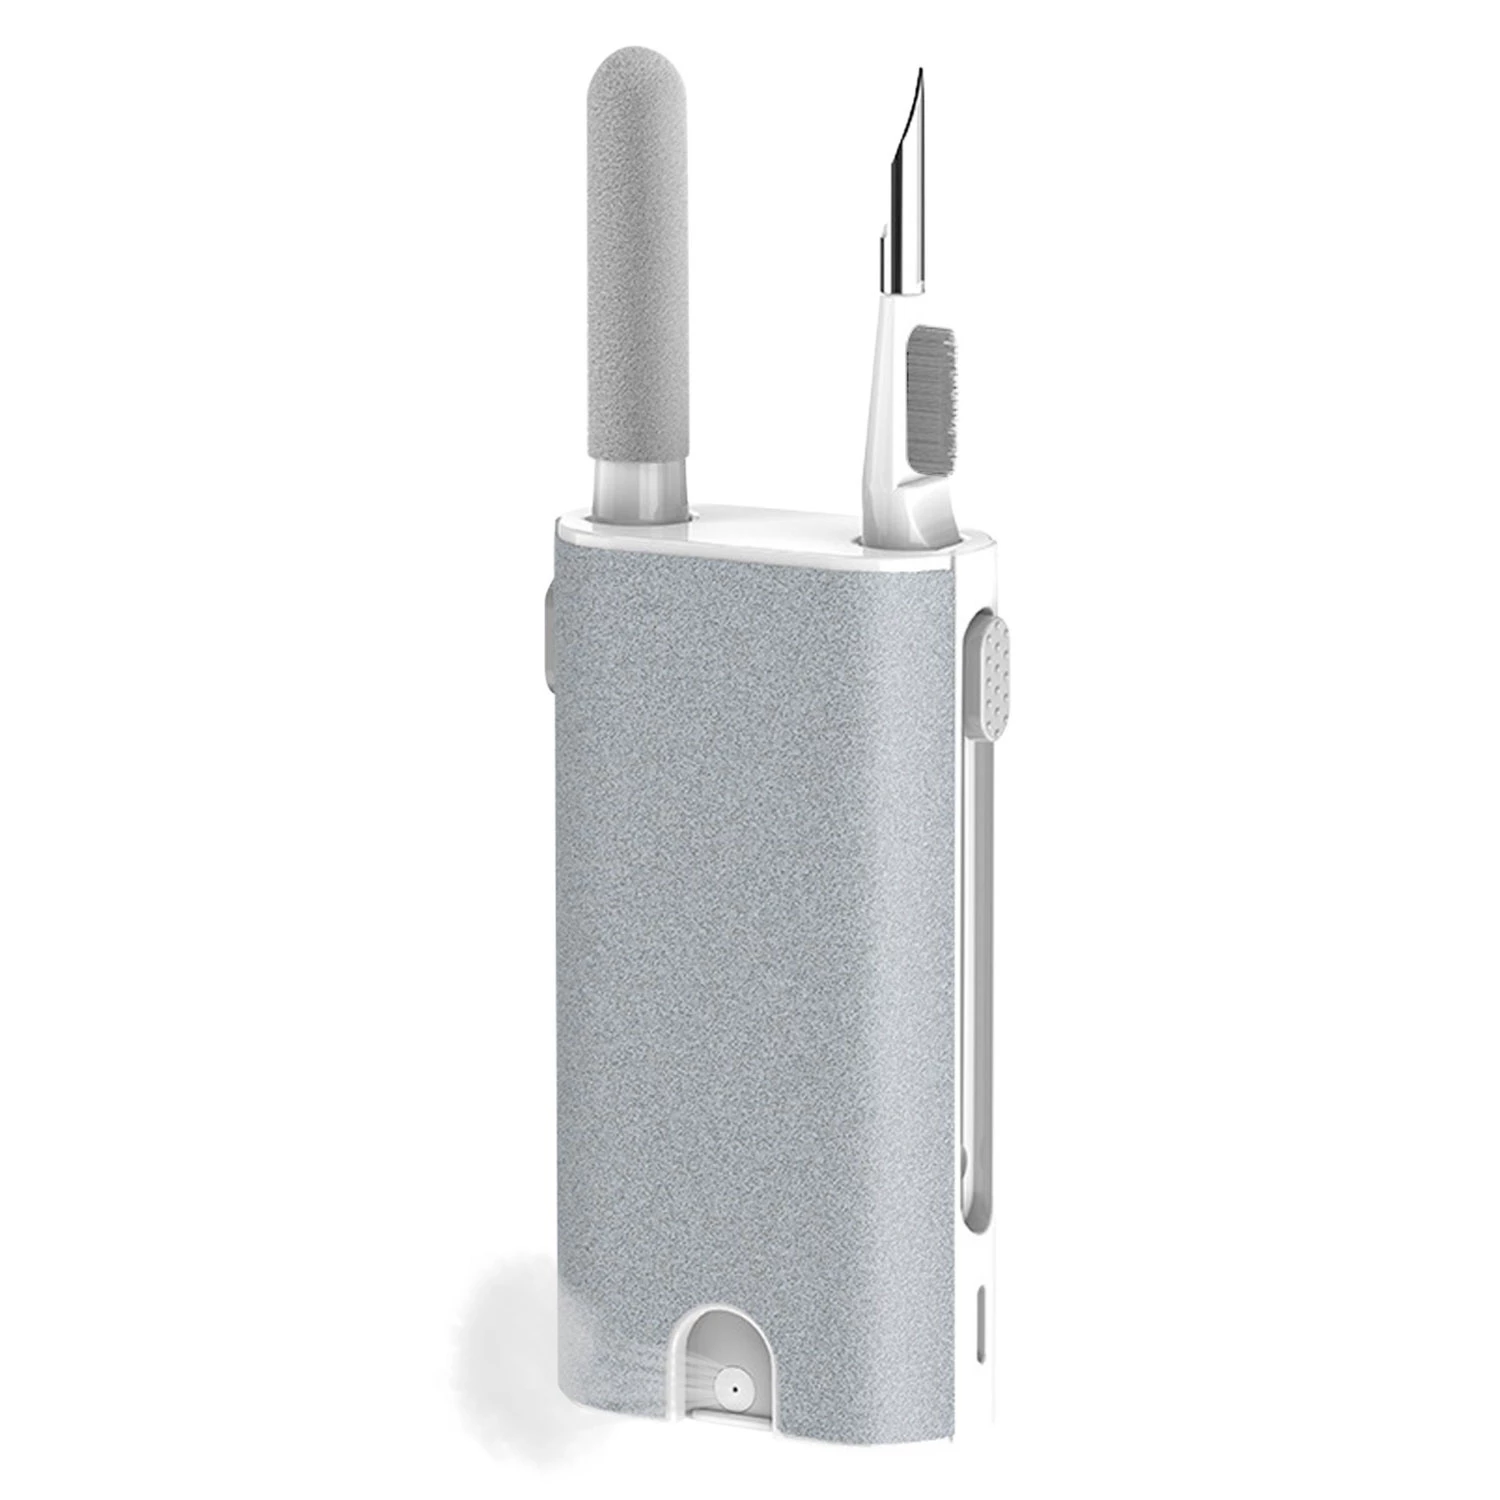 Airpod Pen Cleaner Kit - Multi-Function, Laptop, Phone, Screen, Earphone Cleaning Brush, Charging Ca